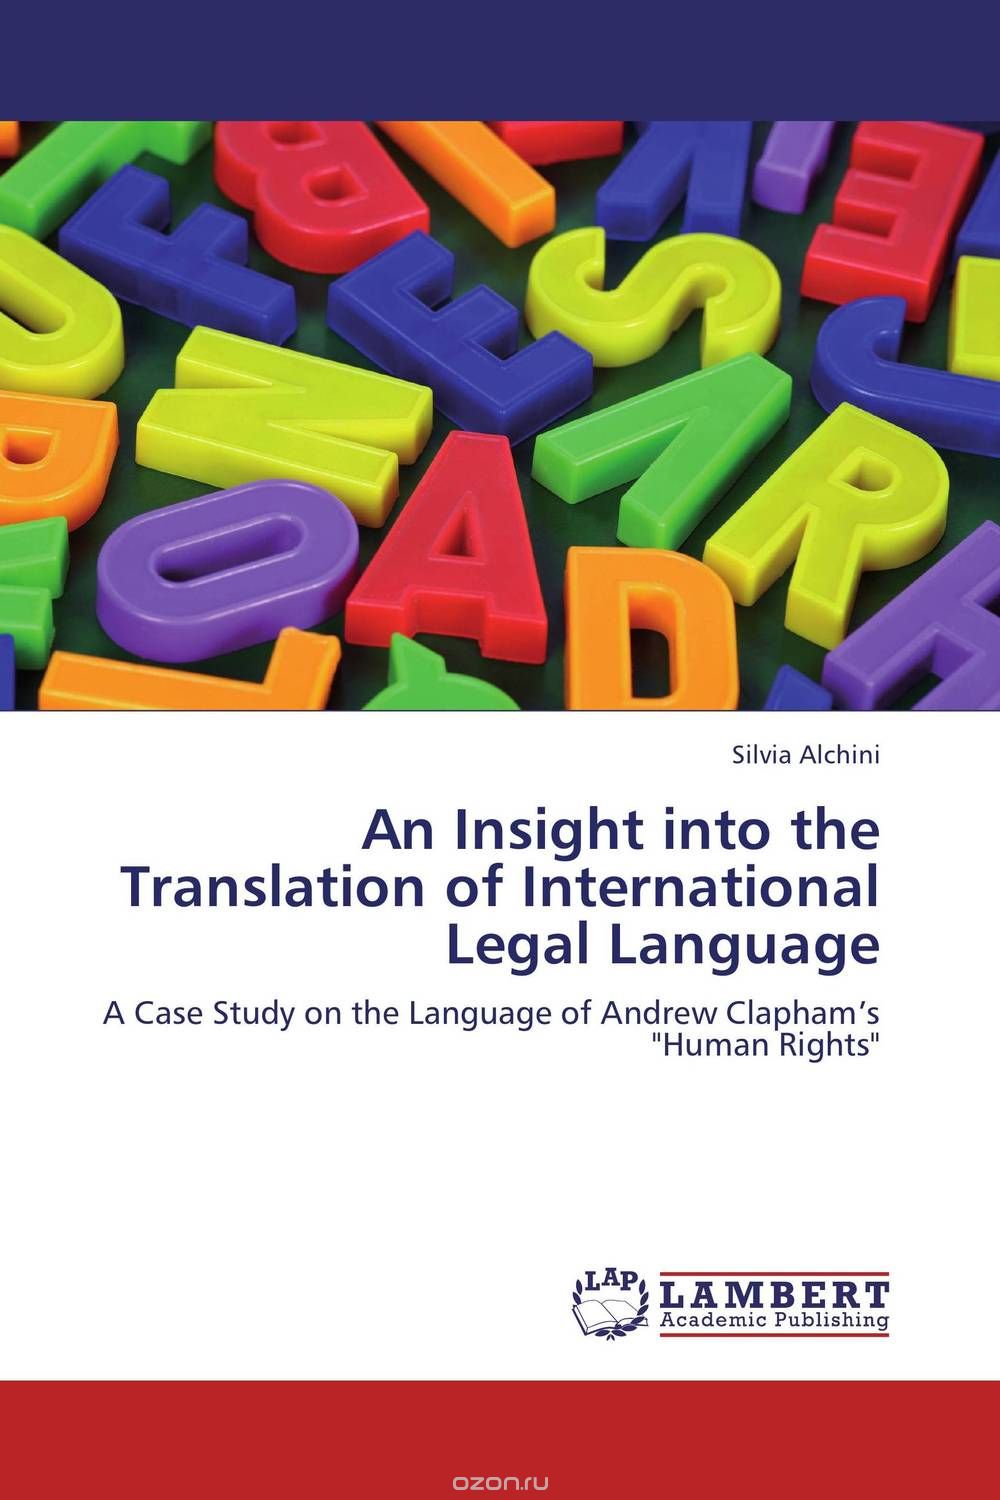 Скачать книгу "An Insight into the Translation of International Legal Language"